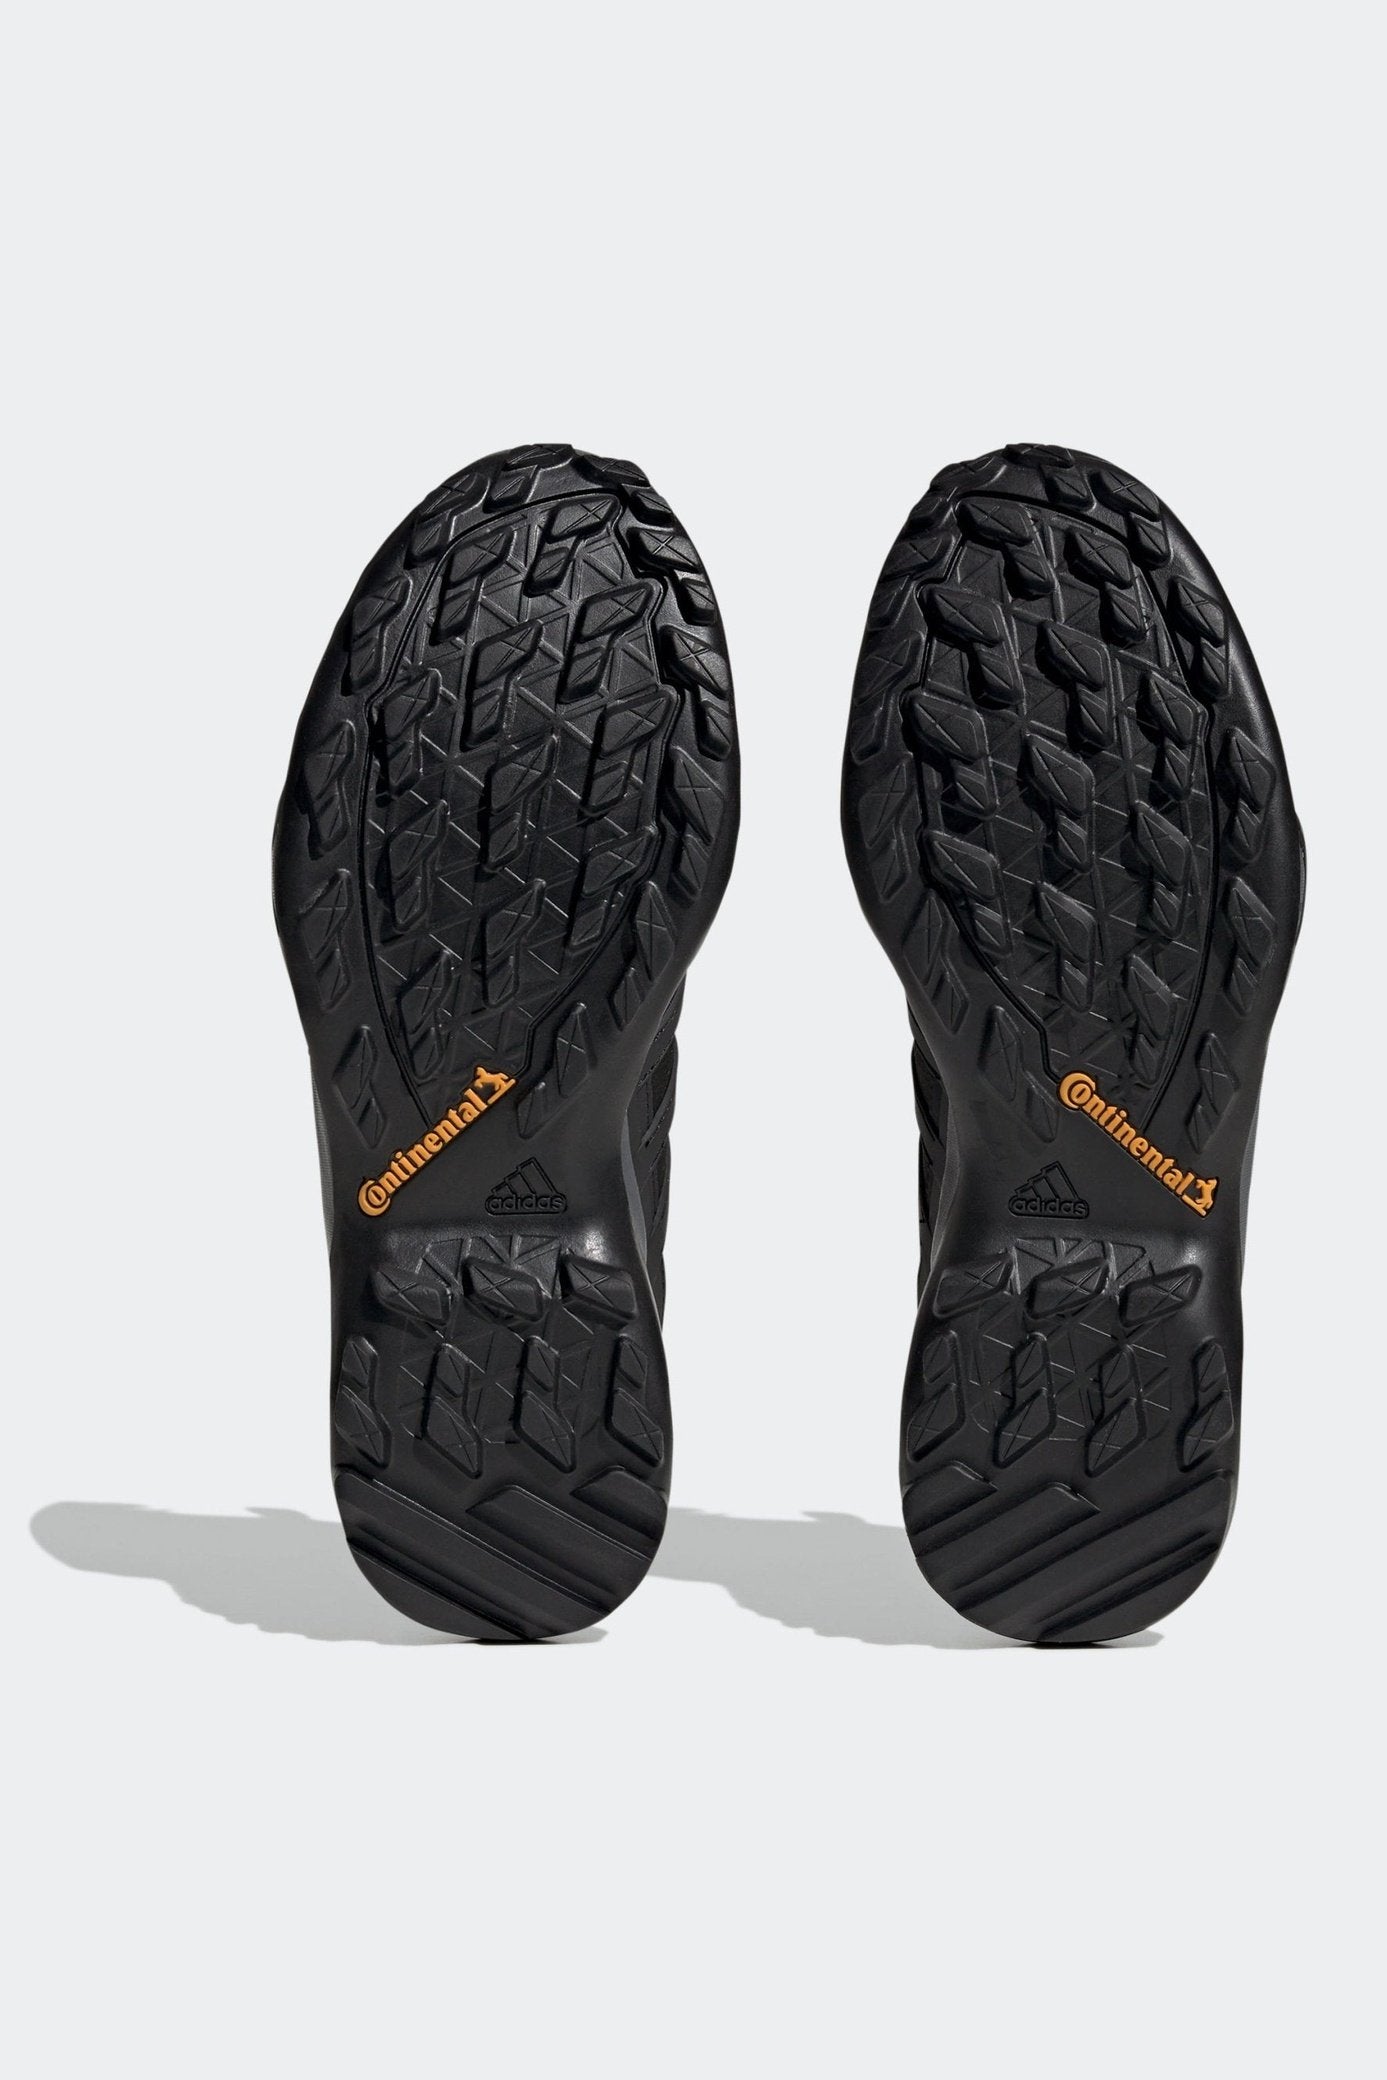 ADIDAS - נעלי ספורט לגברים TERREX SWIFT R2 GTX בצבע שחור ואפור - MASHBIR//365